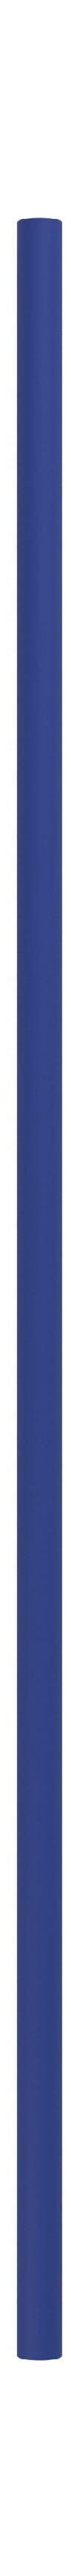 Moebe -Regalsystem/Wandregalbein 85 cm, tiefblau